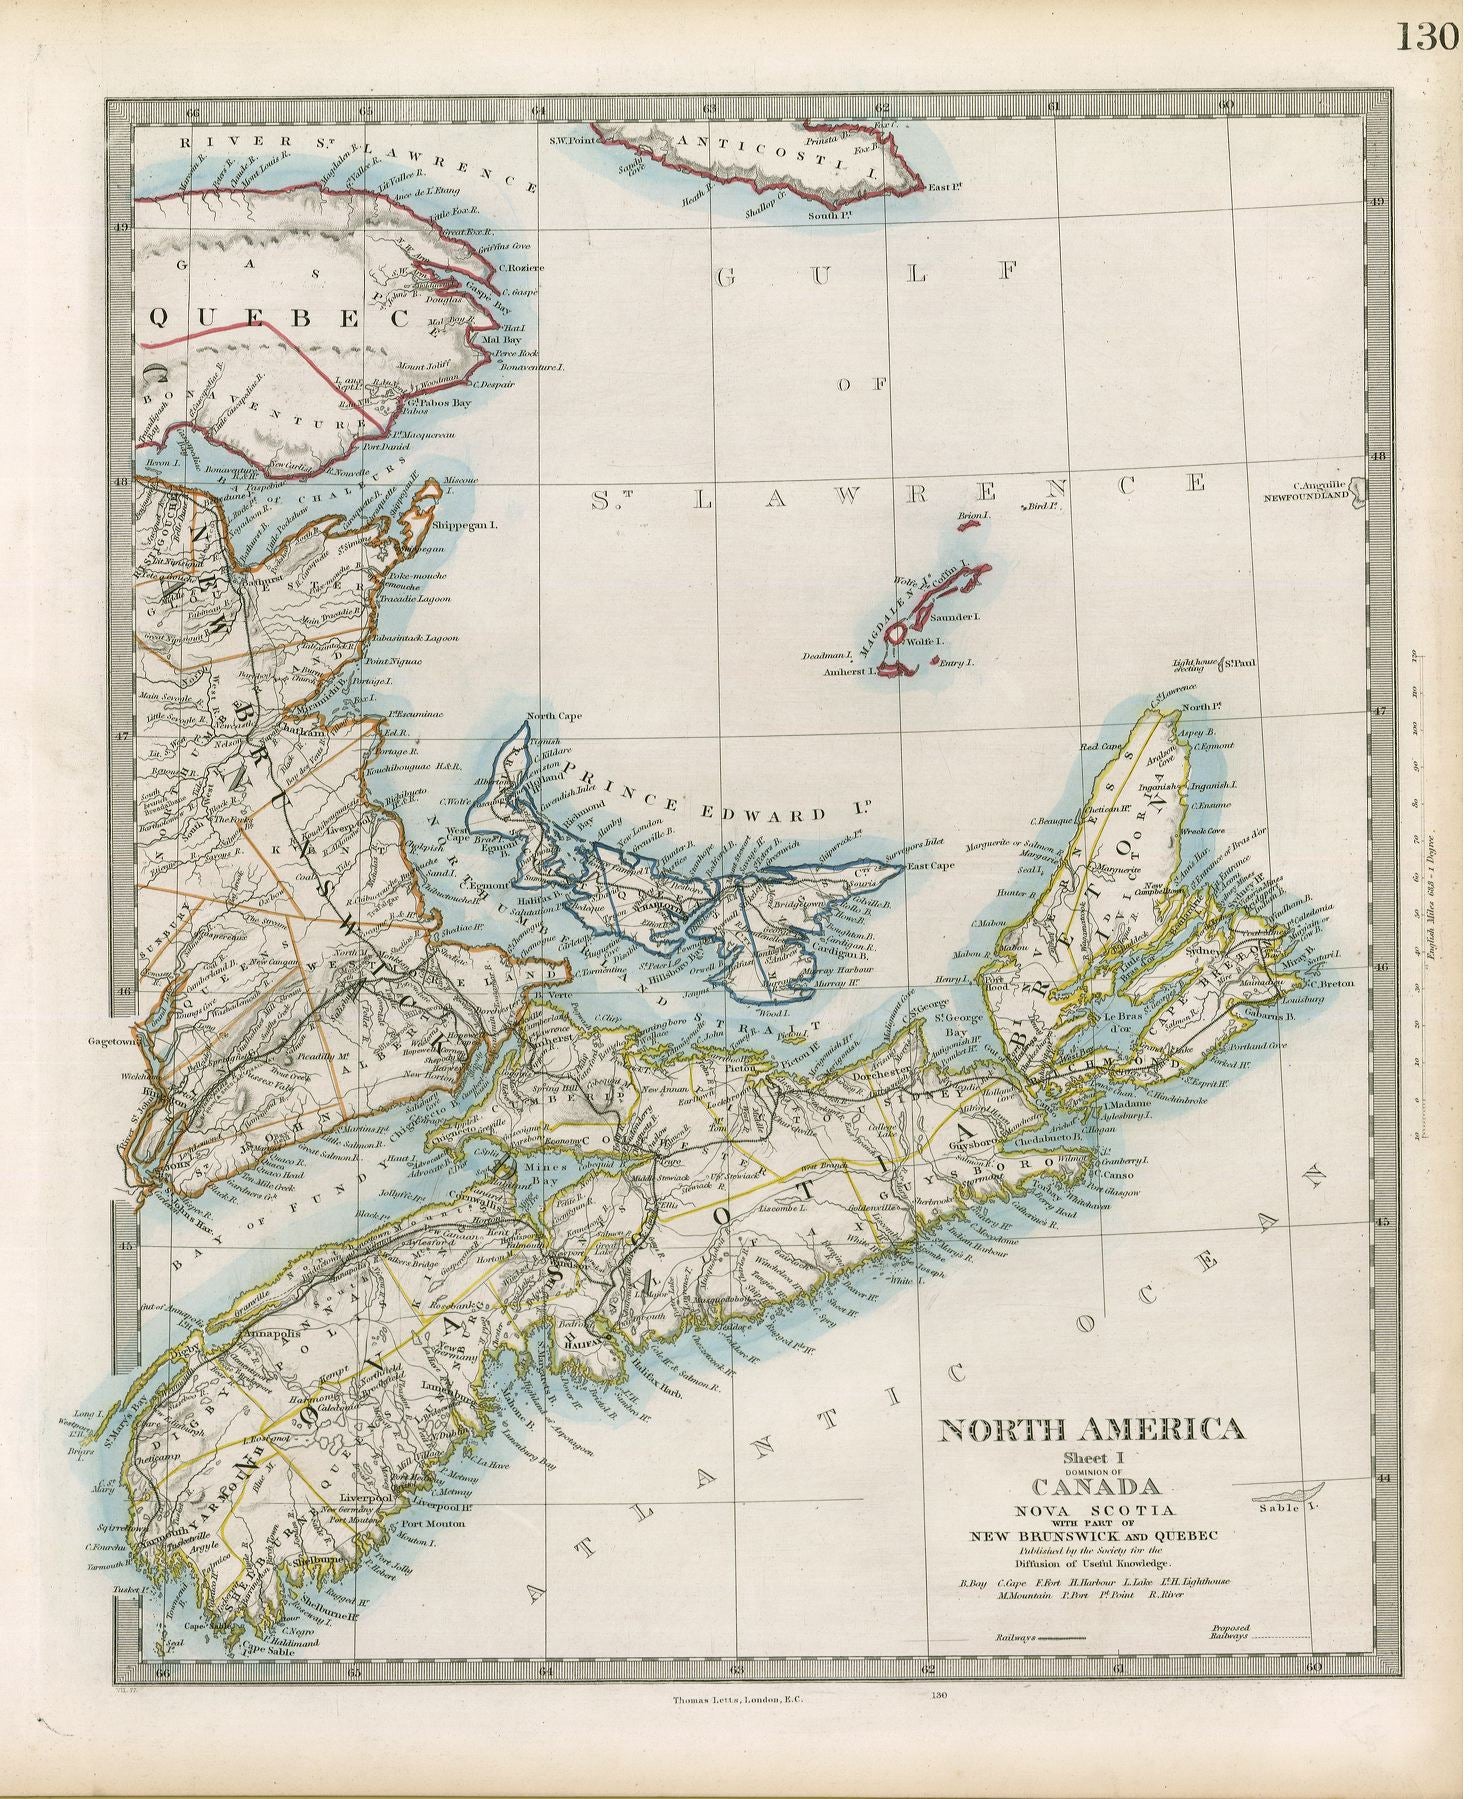 SDUK: North America sheet I. Dominion of Canada. Nova Scotia with part of New Brunswick and Quebec. 1877